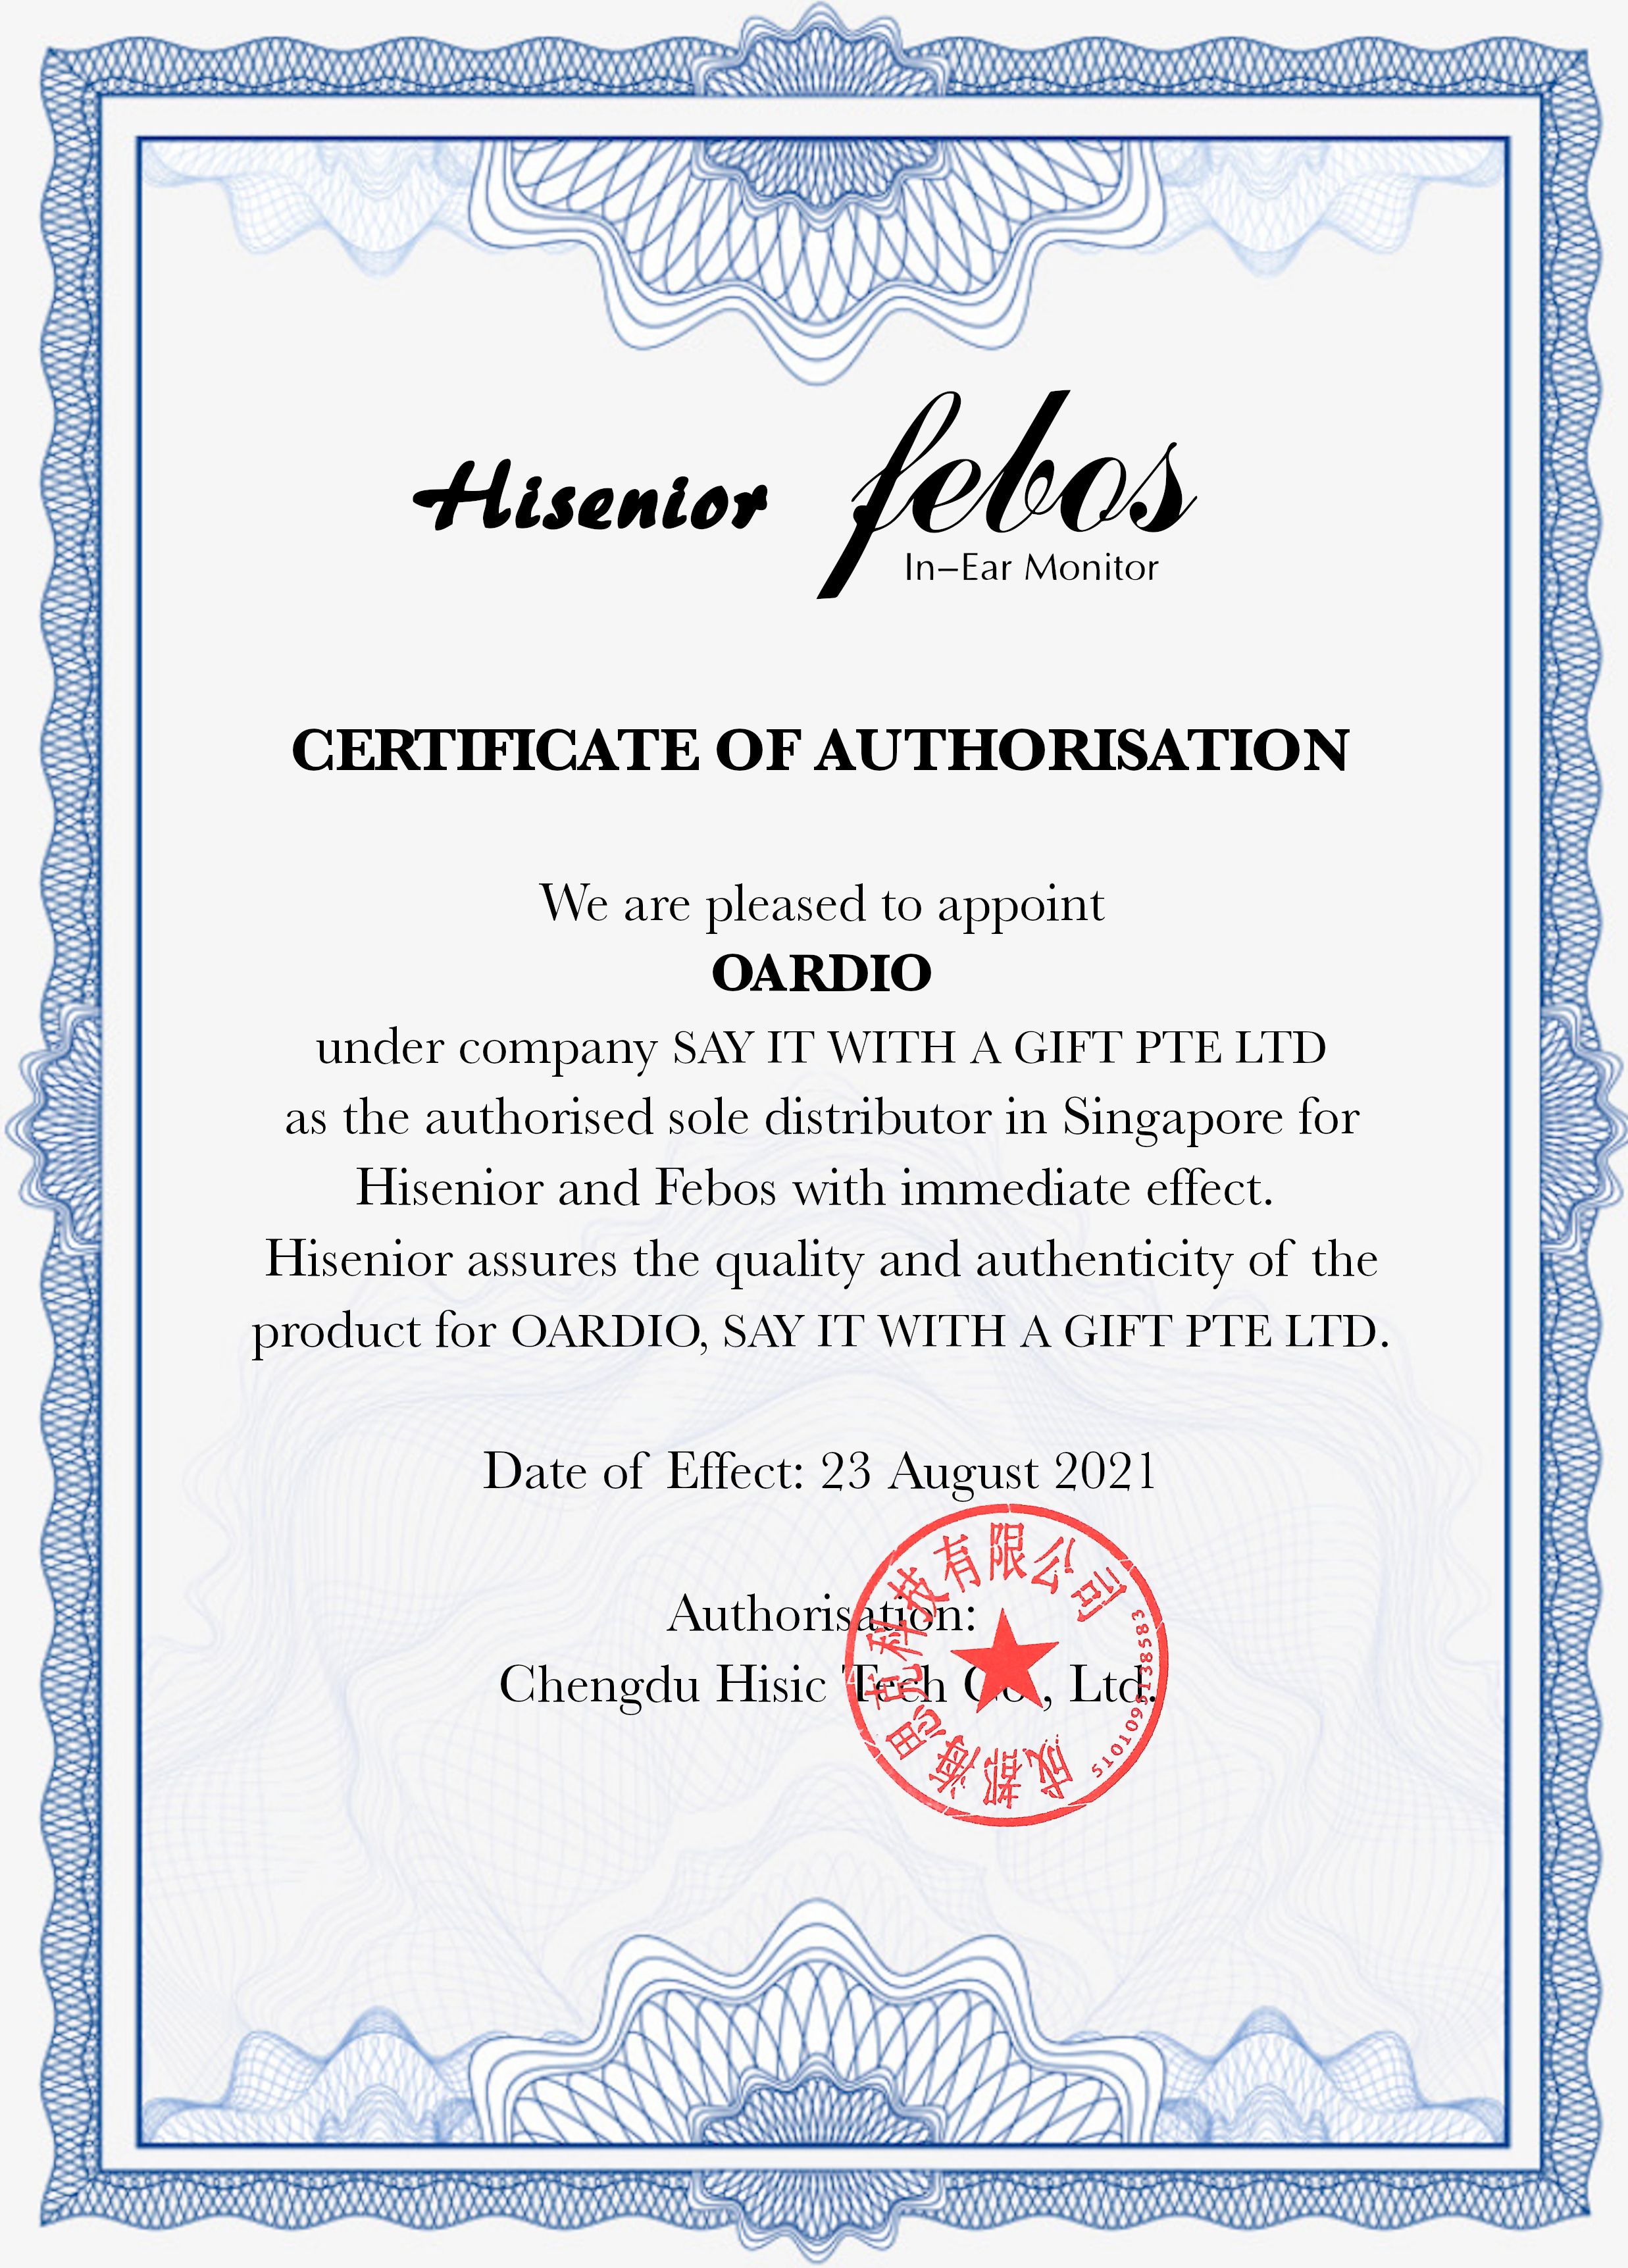 Hisenior Febos Singapore Sole Distributor Oardio Certificate of Authorisation